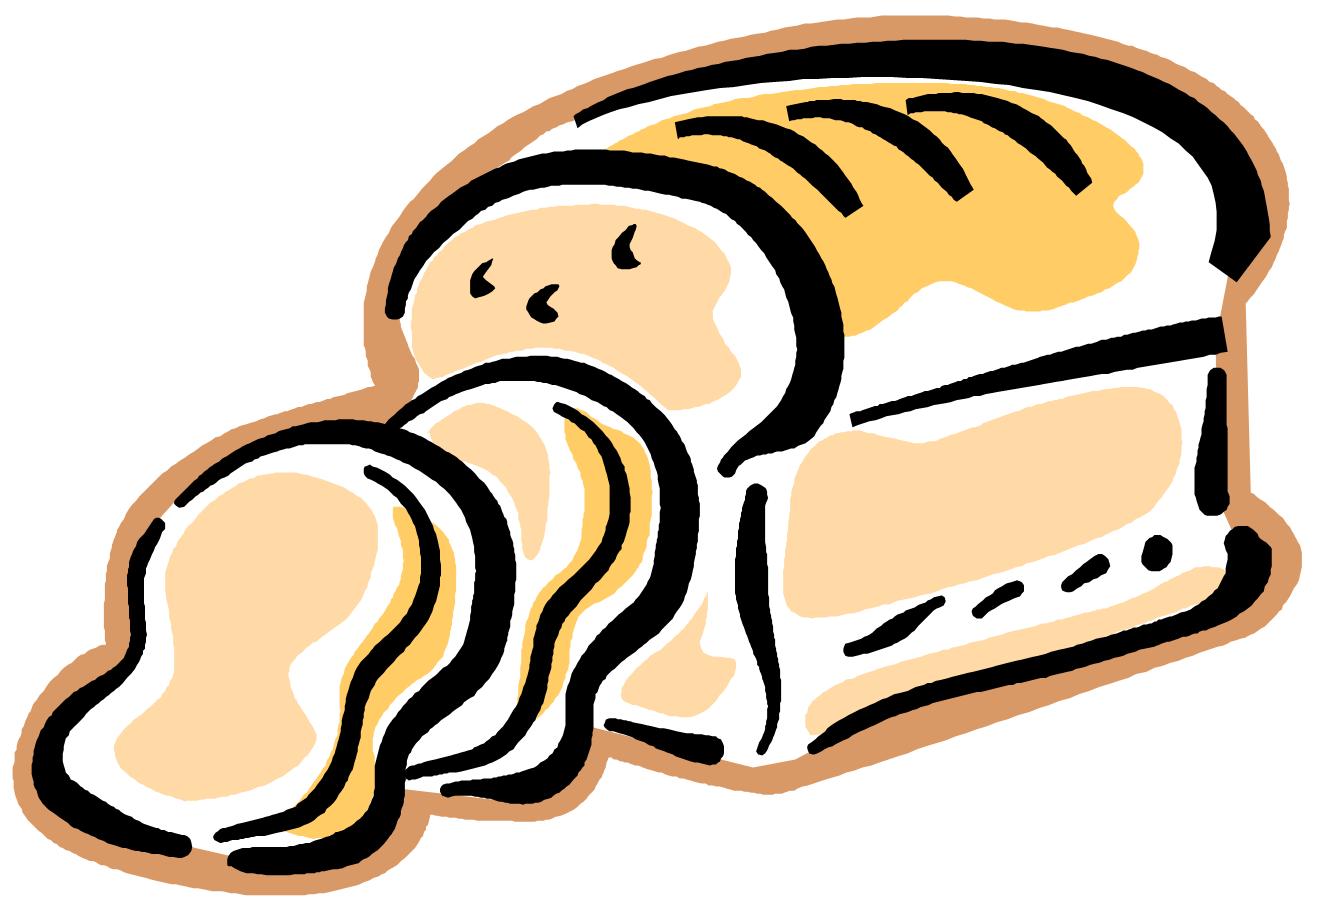 Loaf of bread bread clipart and illustration bread clip art vector - Clipartix